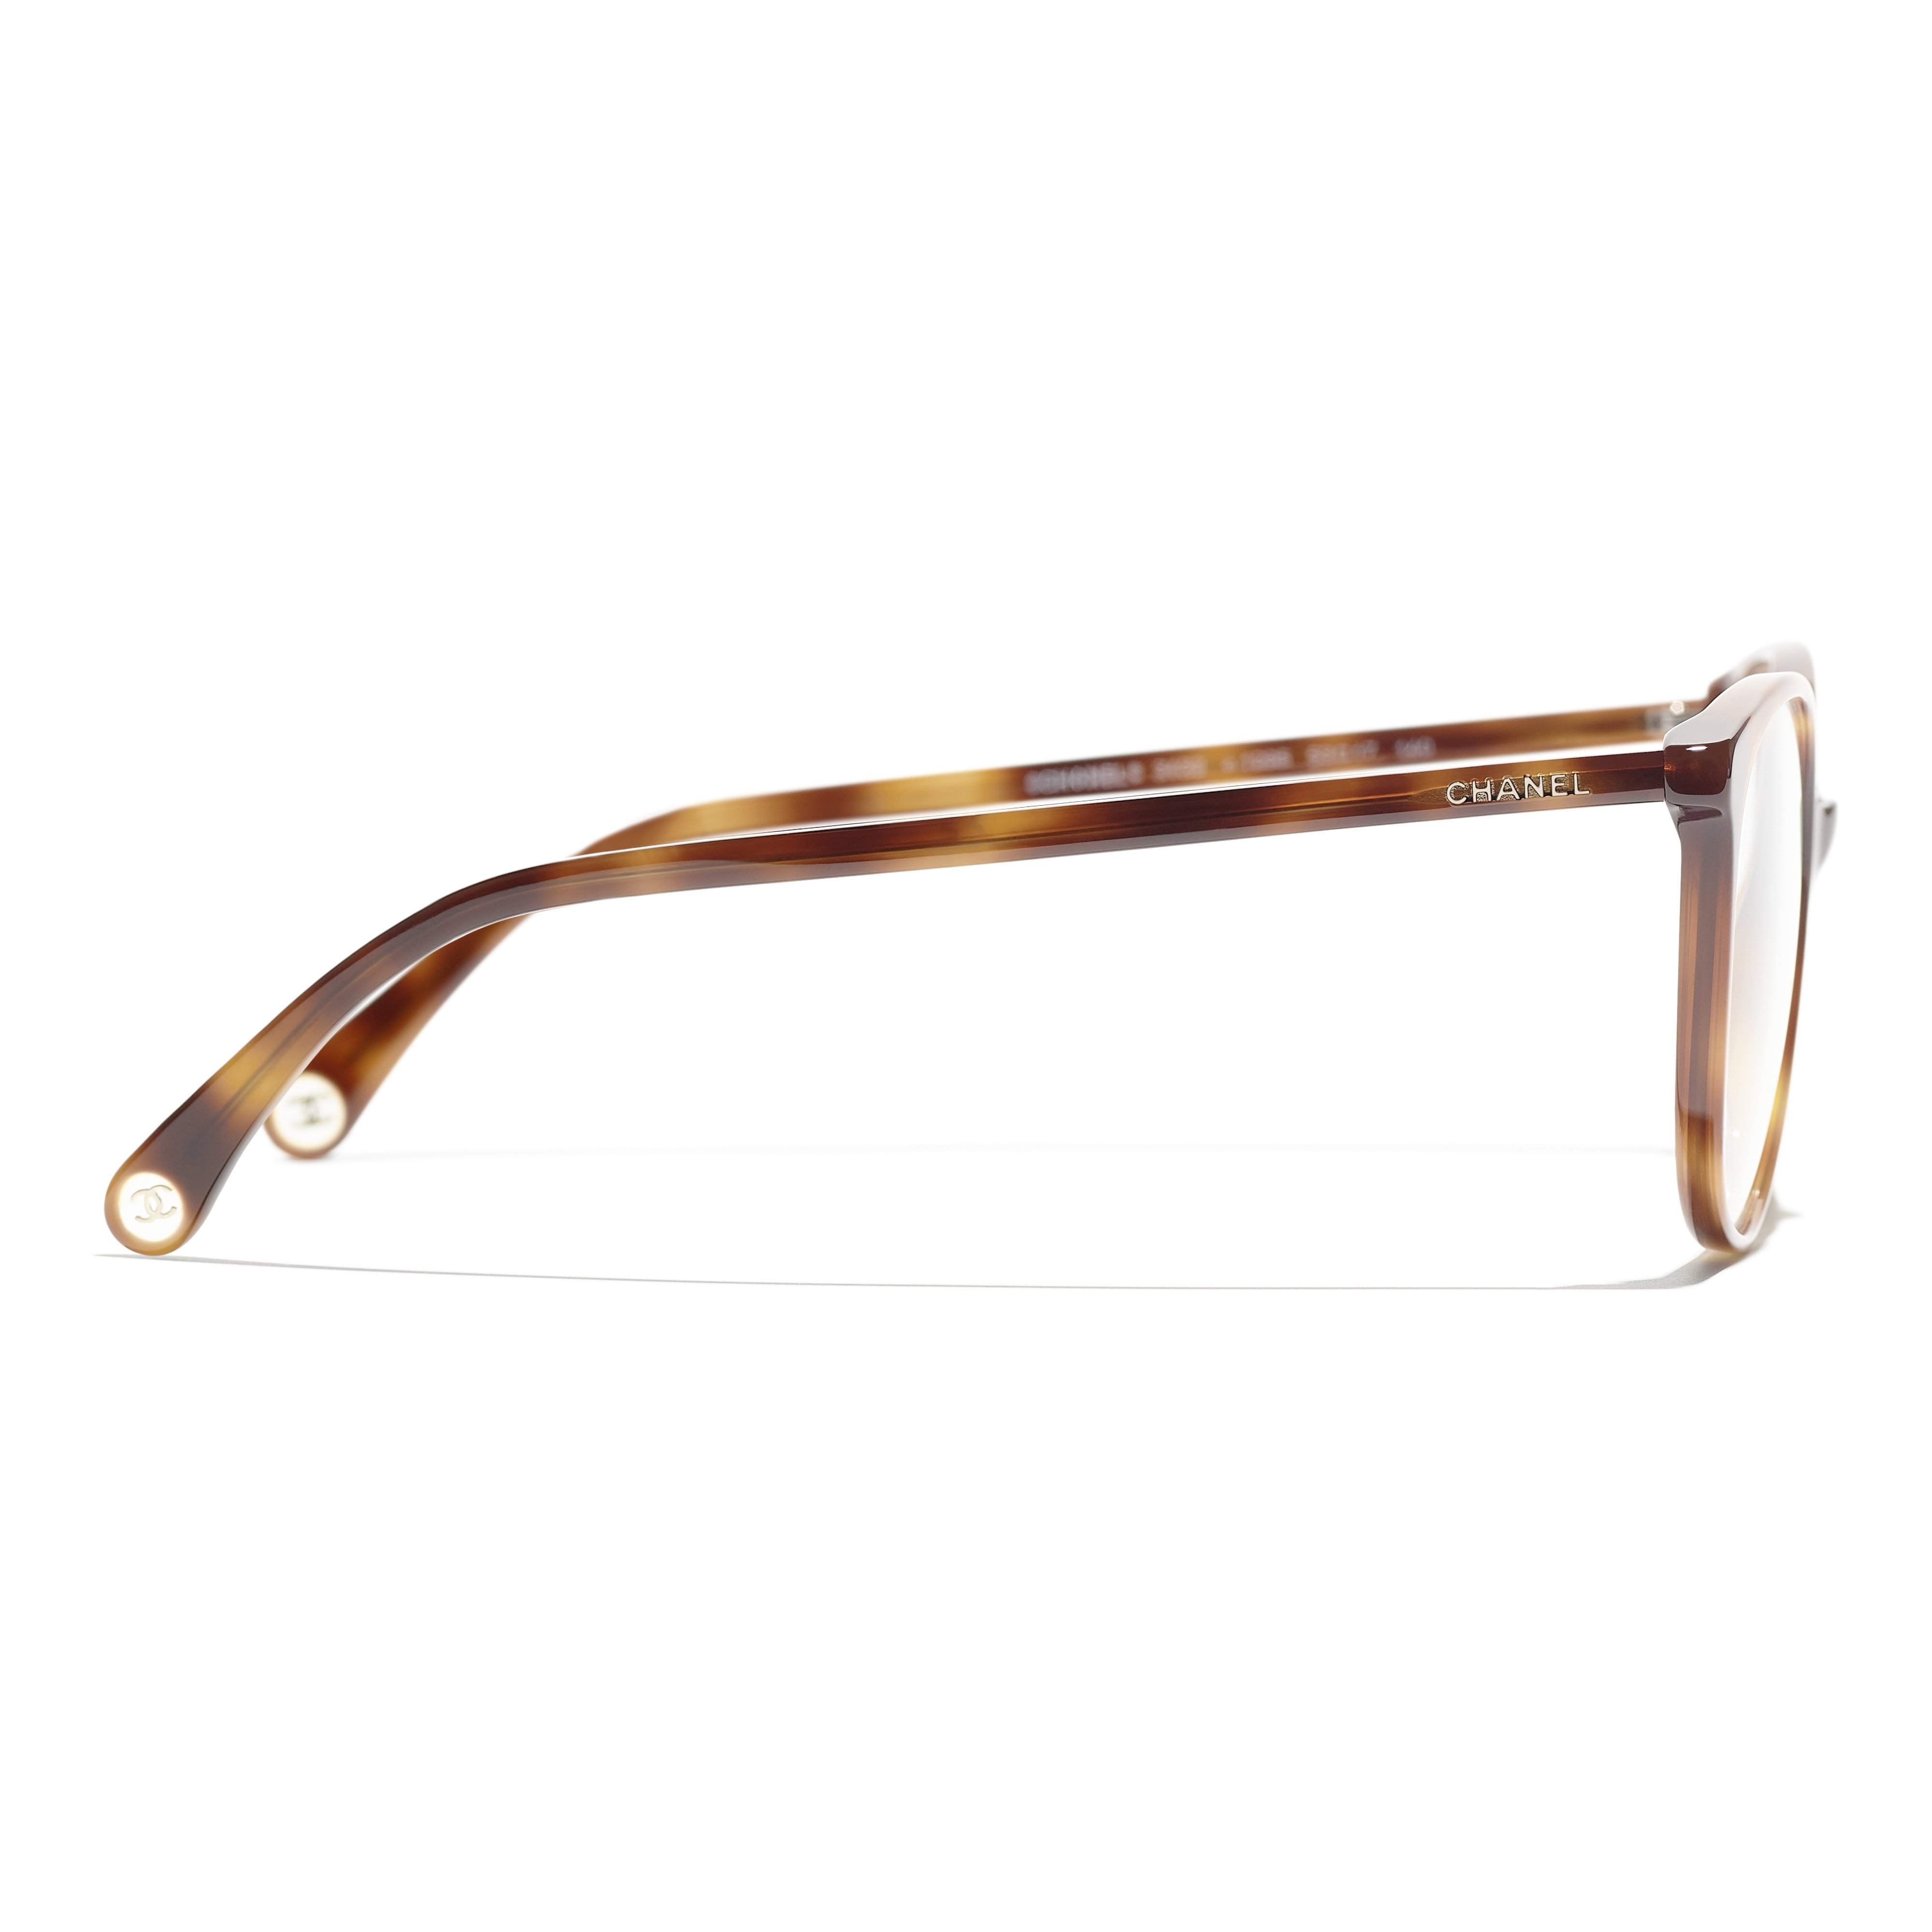 Eyeglasses Chanel CH3432 1295 53-17 Tortoise in stock | Price 187,50 ...